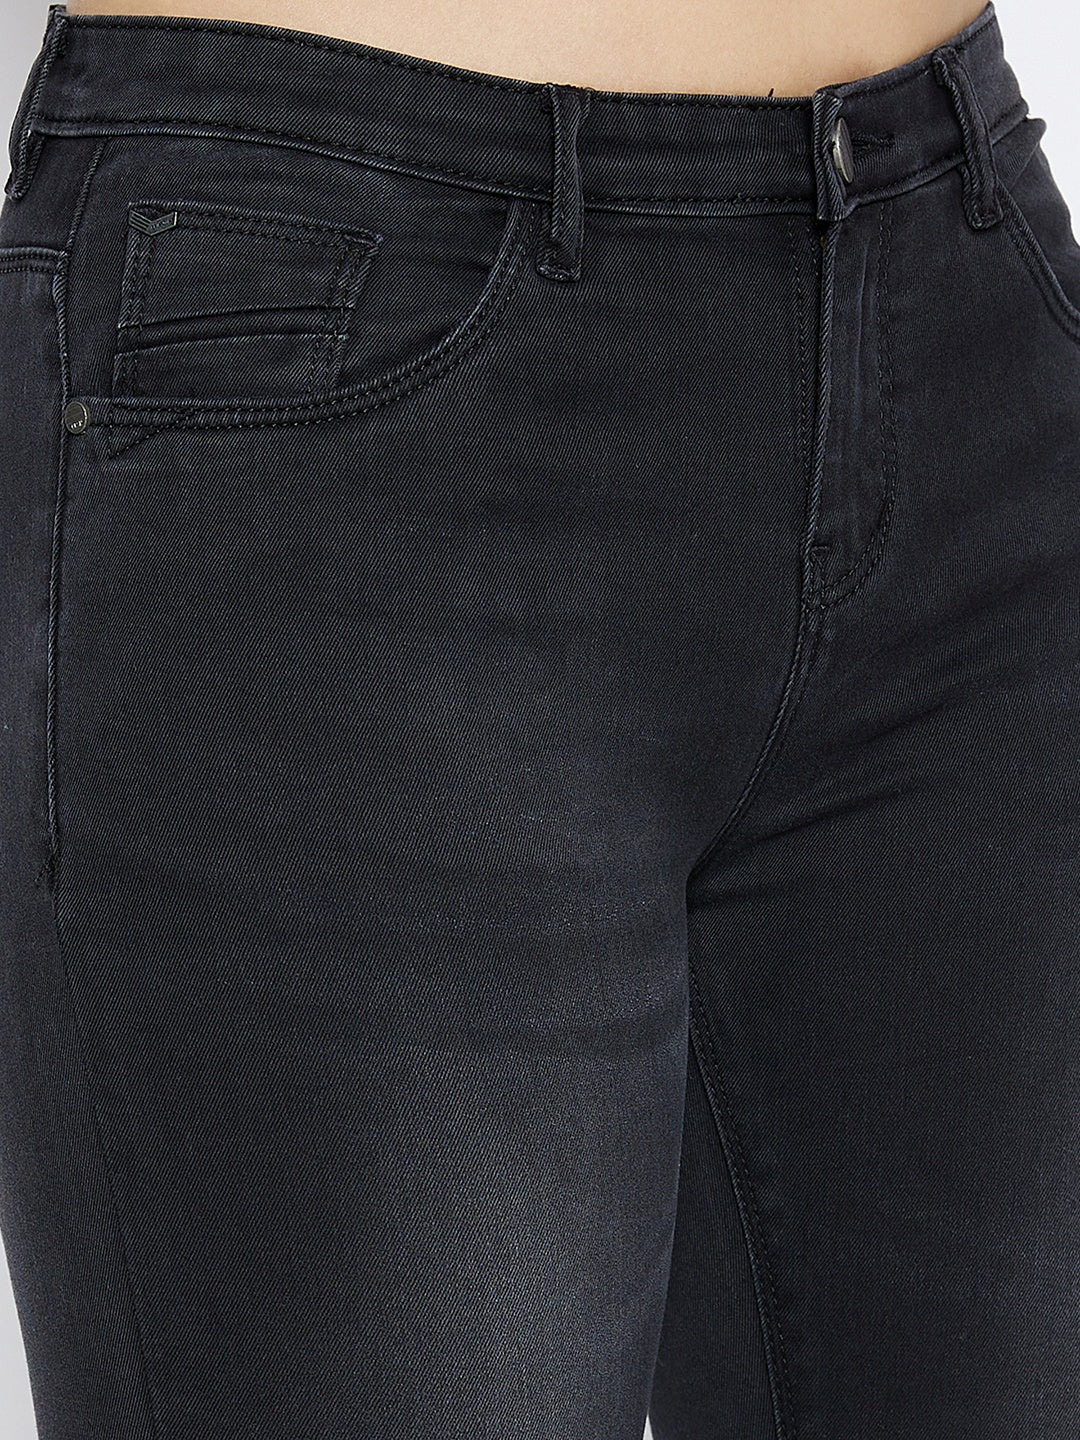 Black Bootcut Jeans - Women Jeans